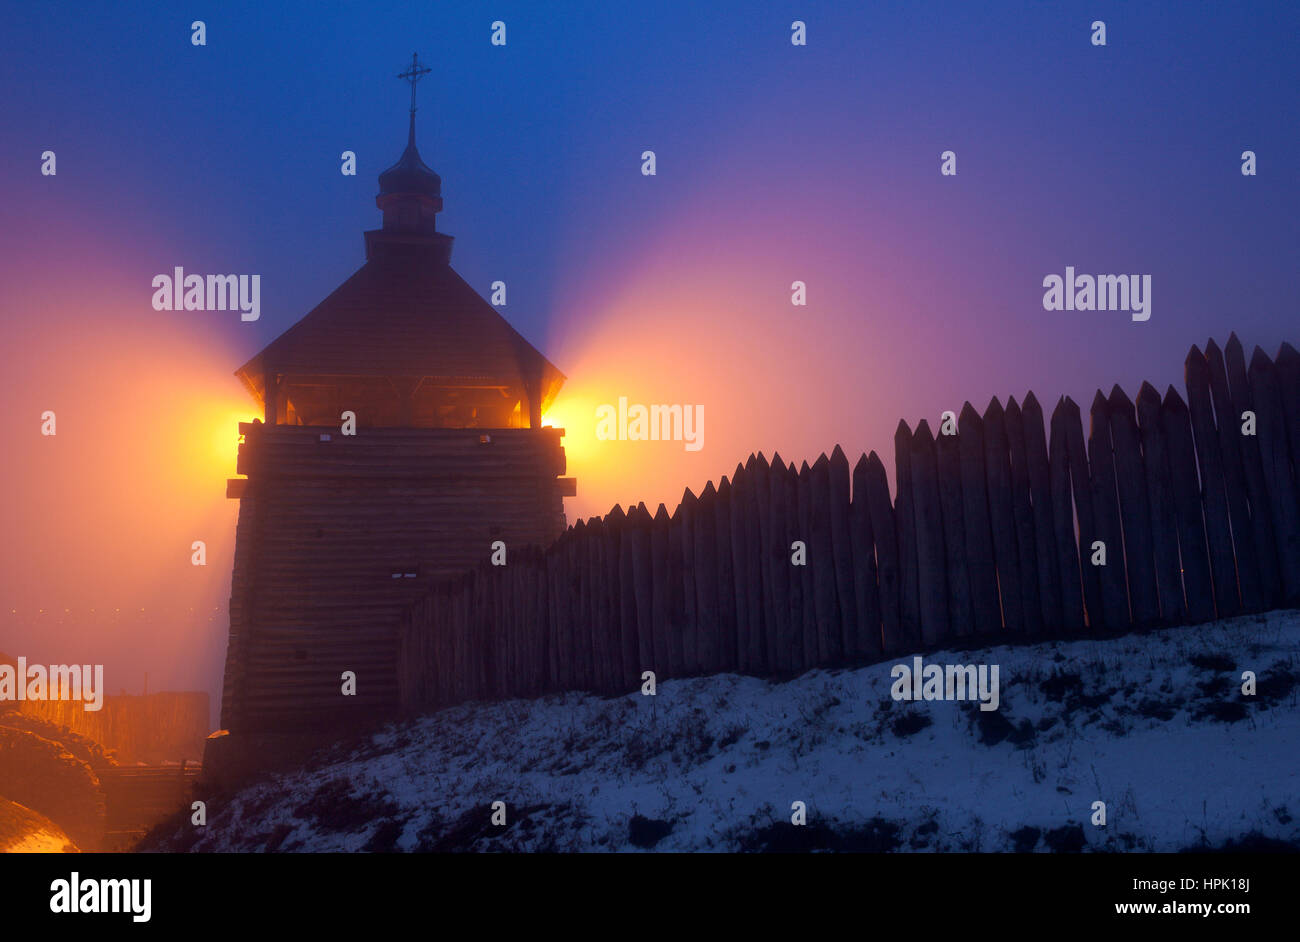 Wooden tower of cossacks fortress 'Zaporizhian Sich' in evening fog with rays of orange illumination lights, Khortytsia island, Zaporozhye, Ukraine Stock Photo